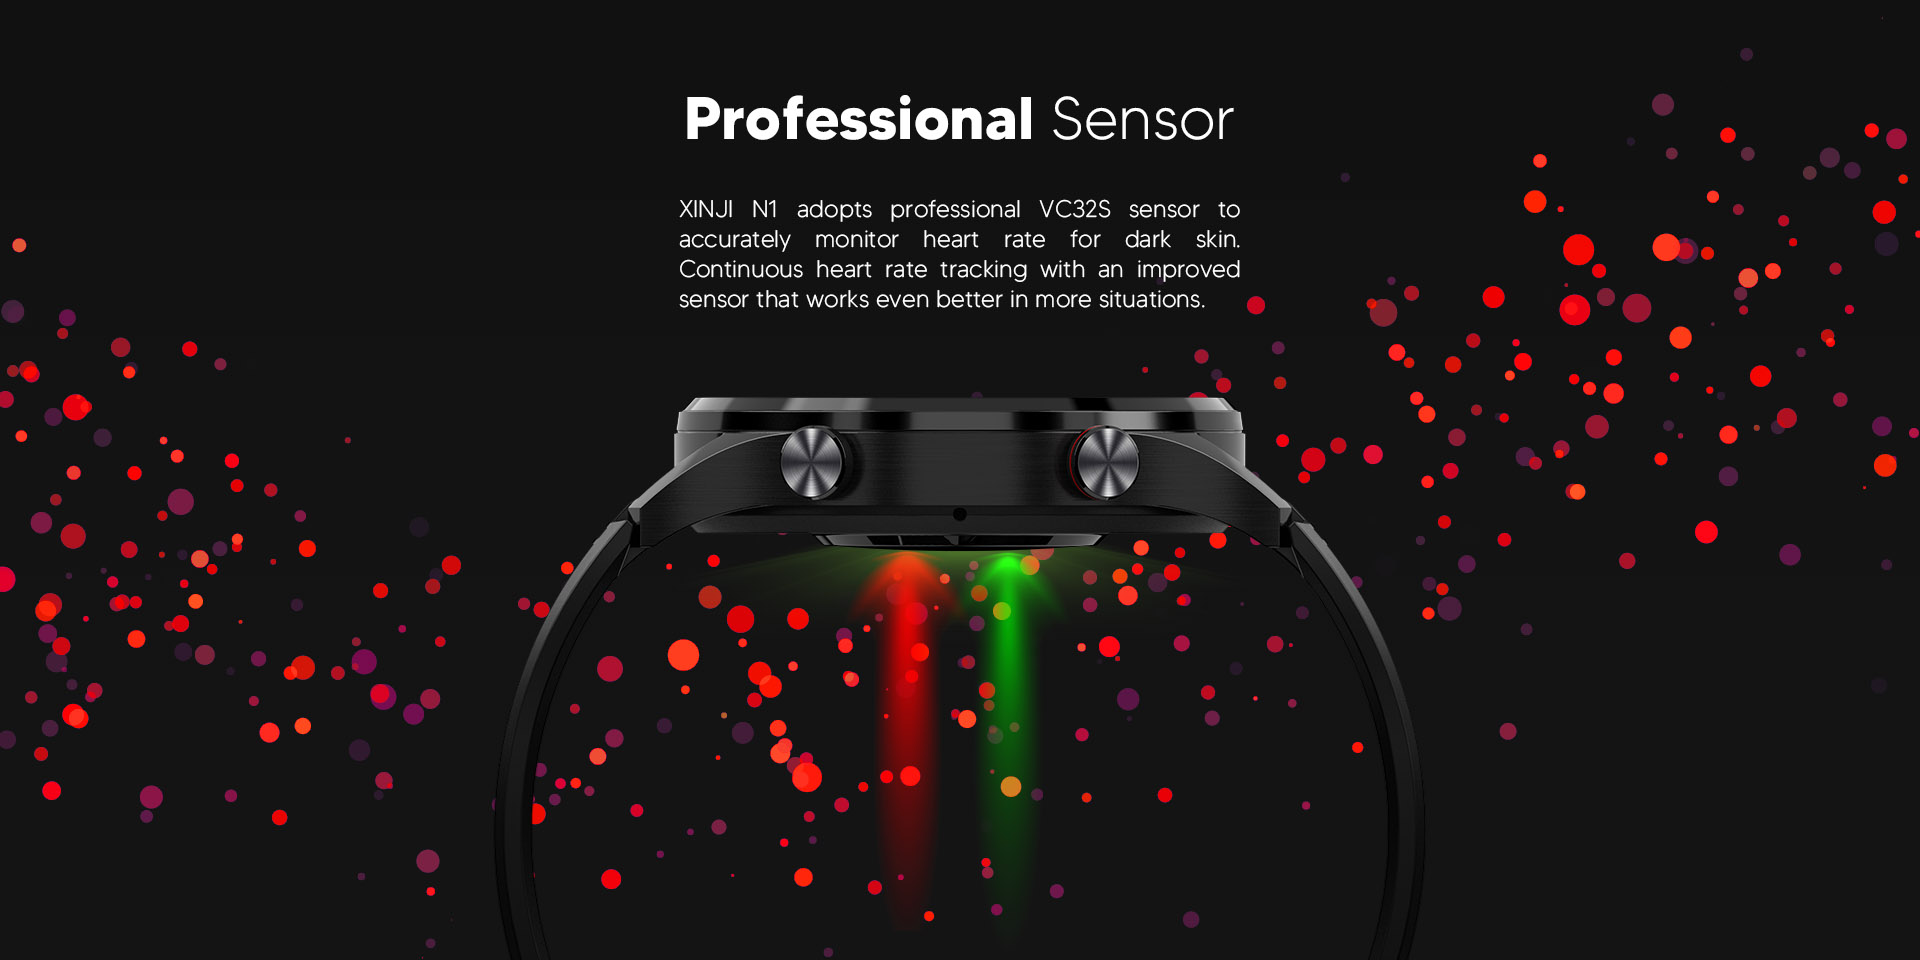 Professional sensor